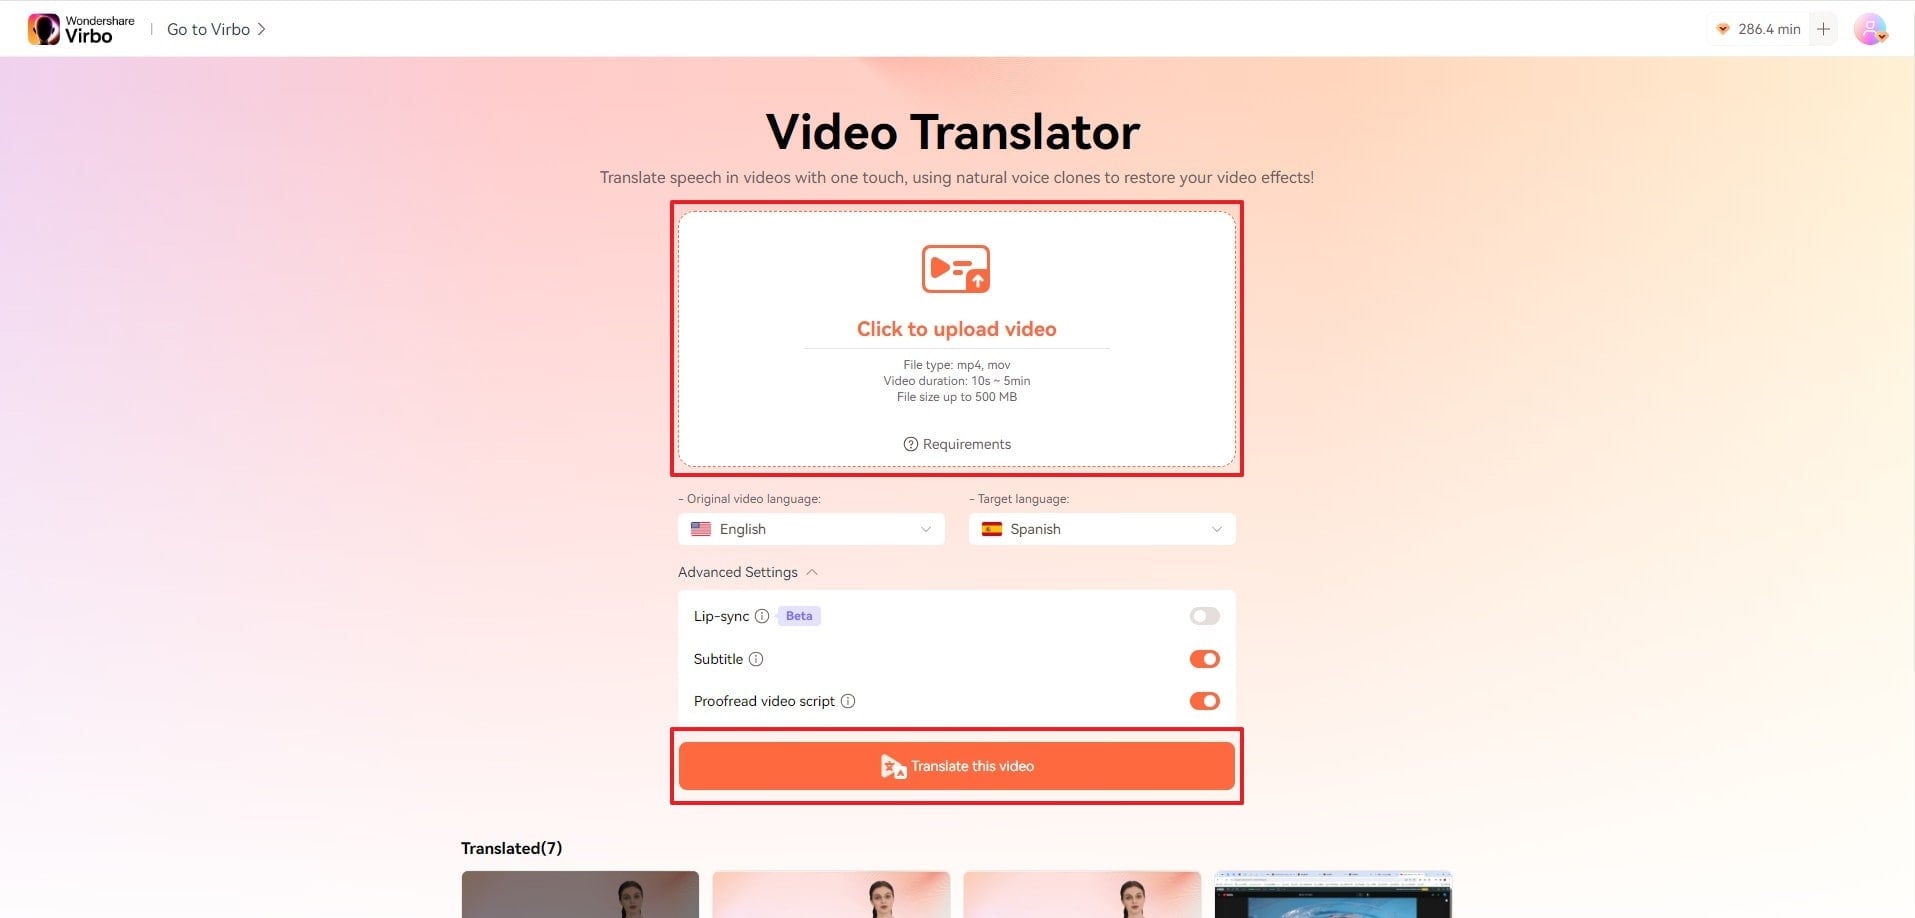 perform the video translation